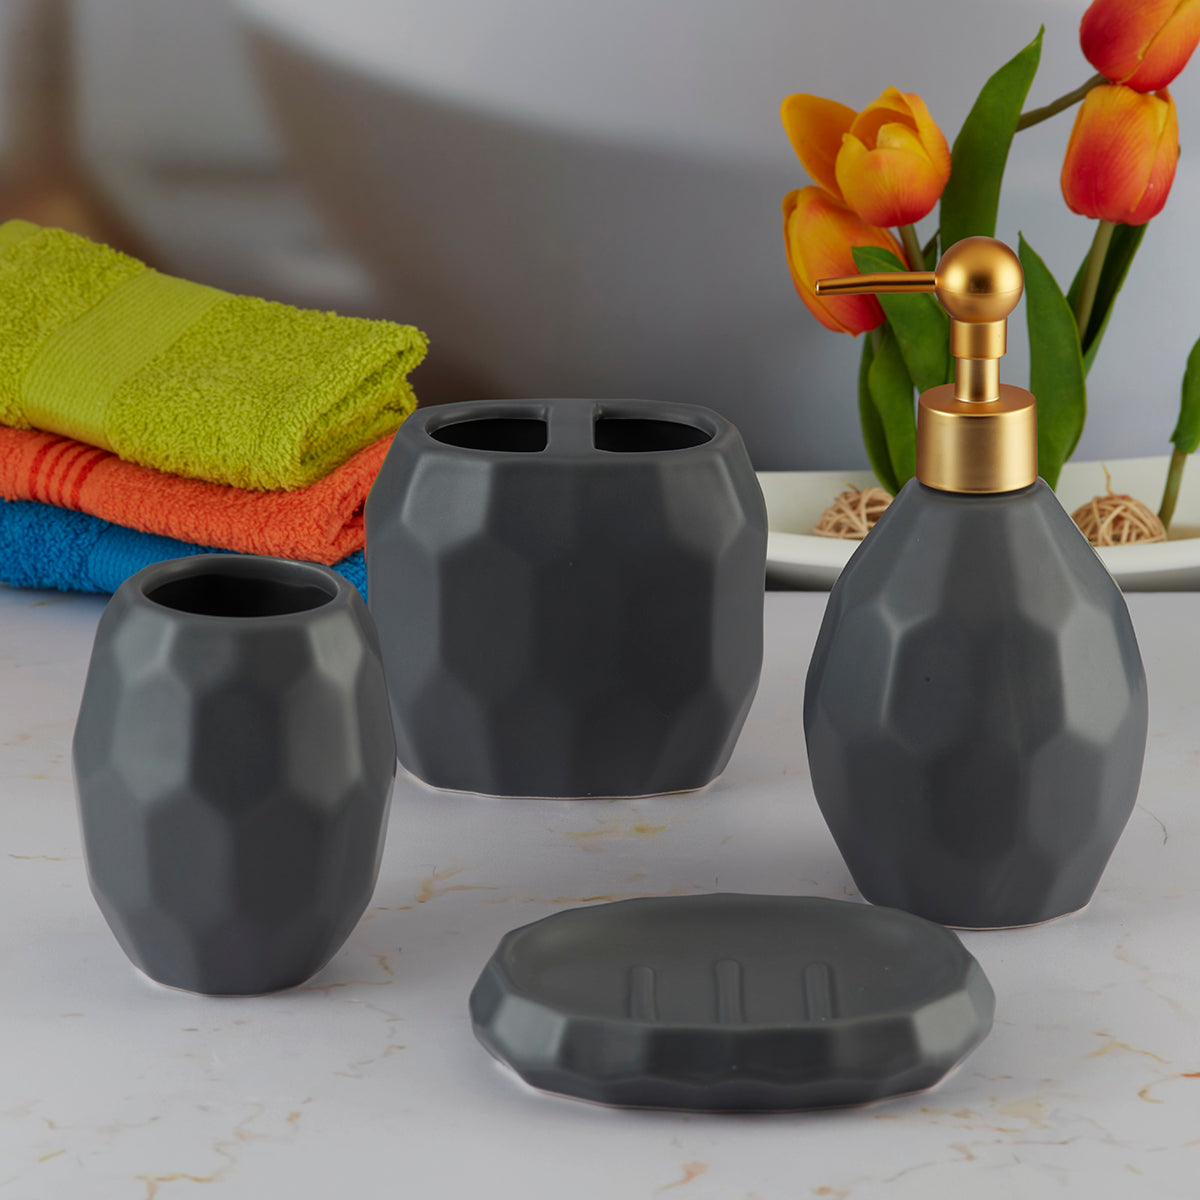 Ceramic Bathroom Accessories Set of 4 Bath Set with Soap Dispenser (5762)